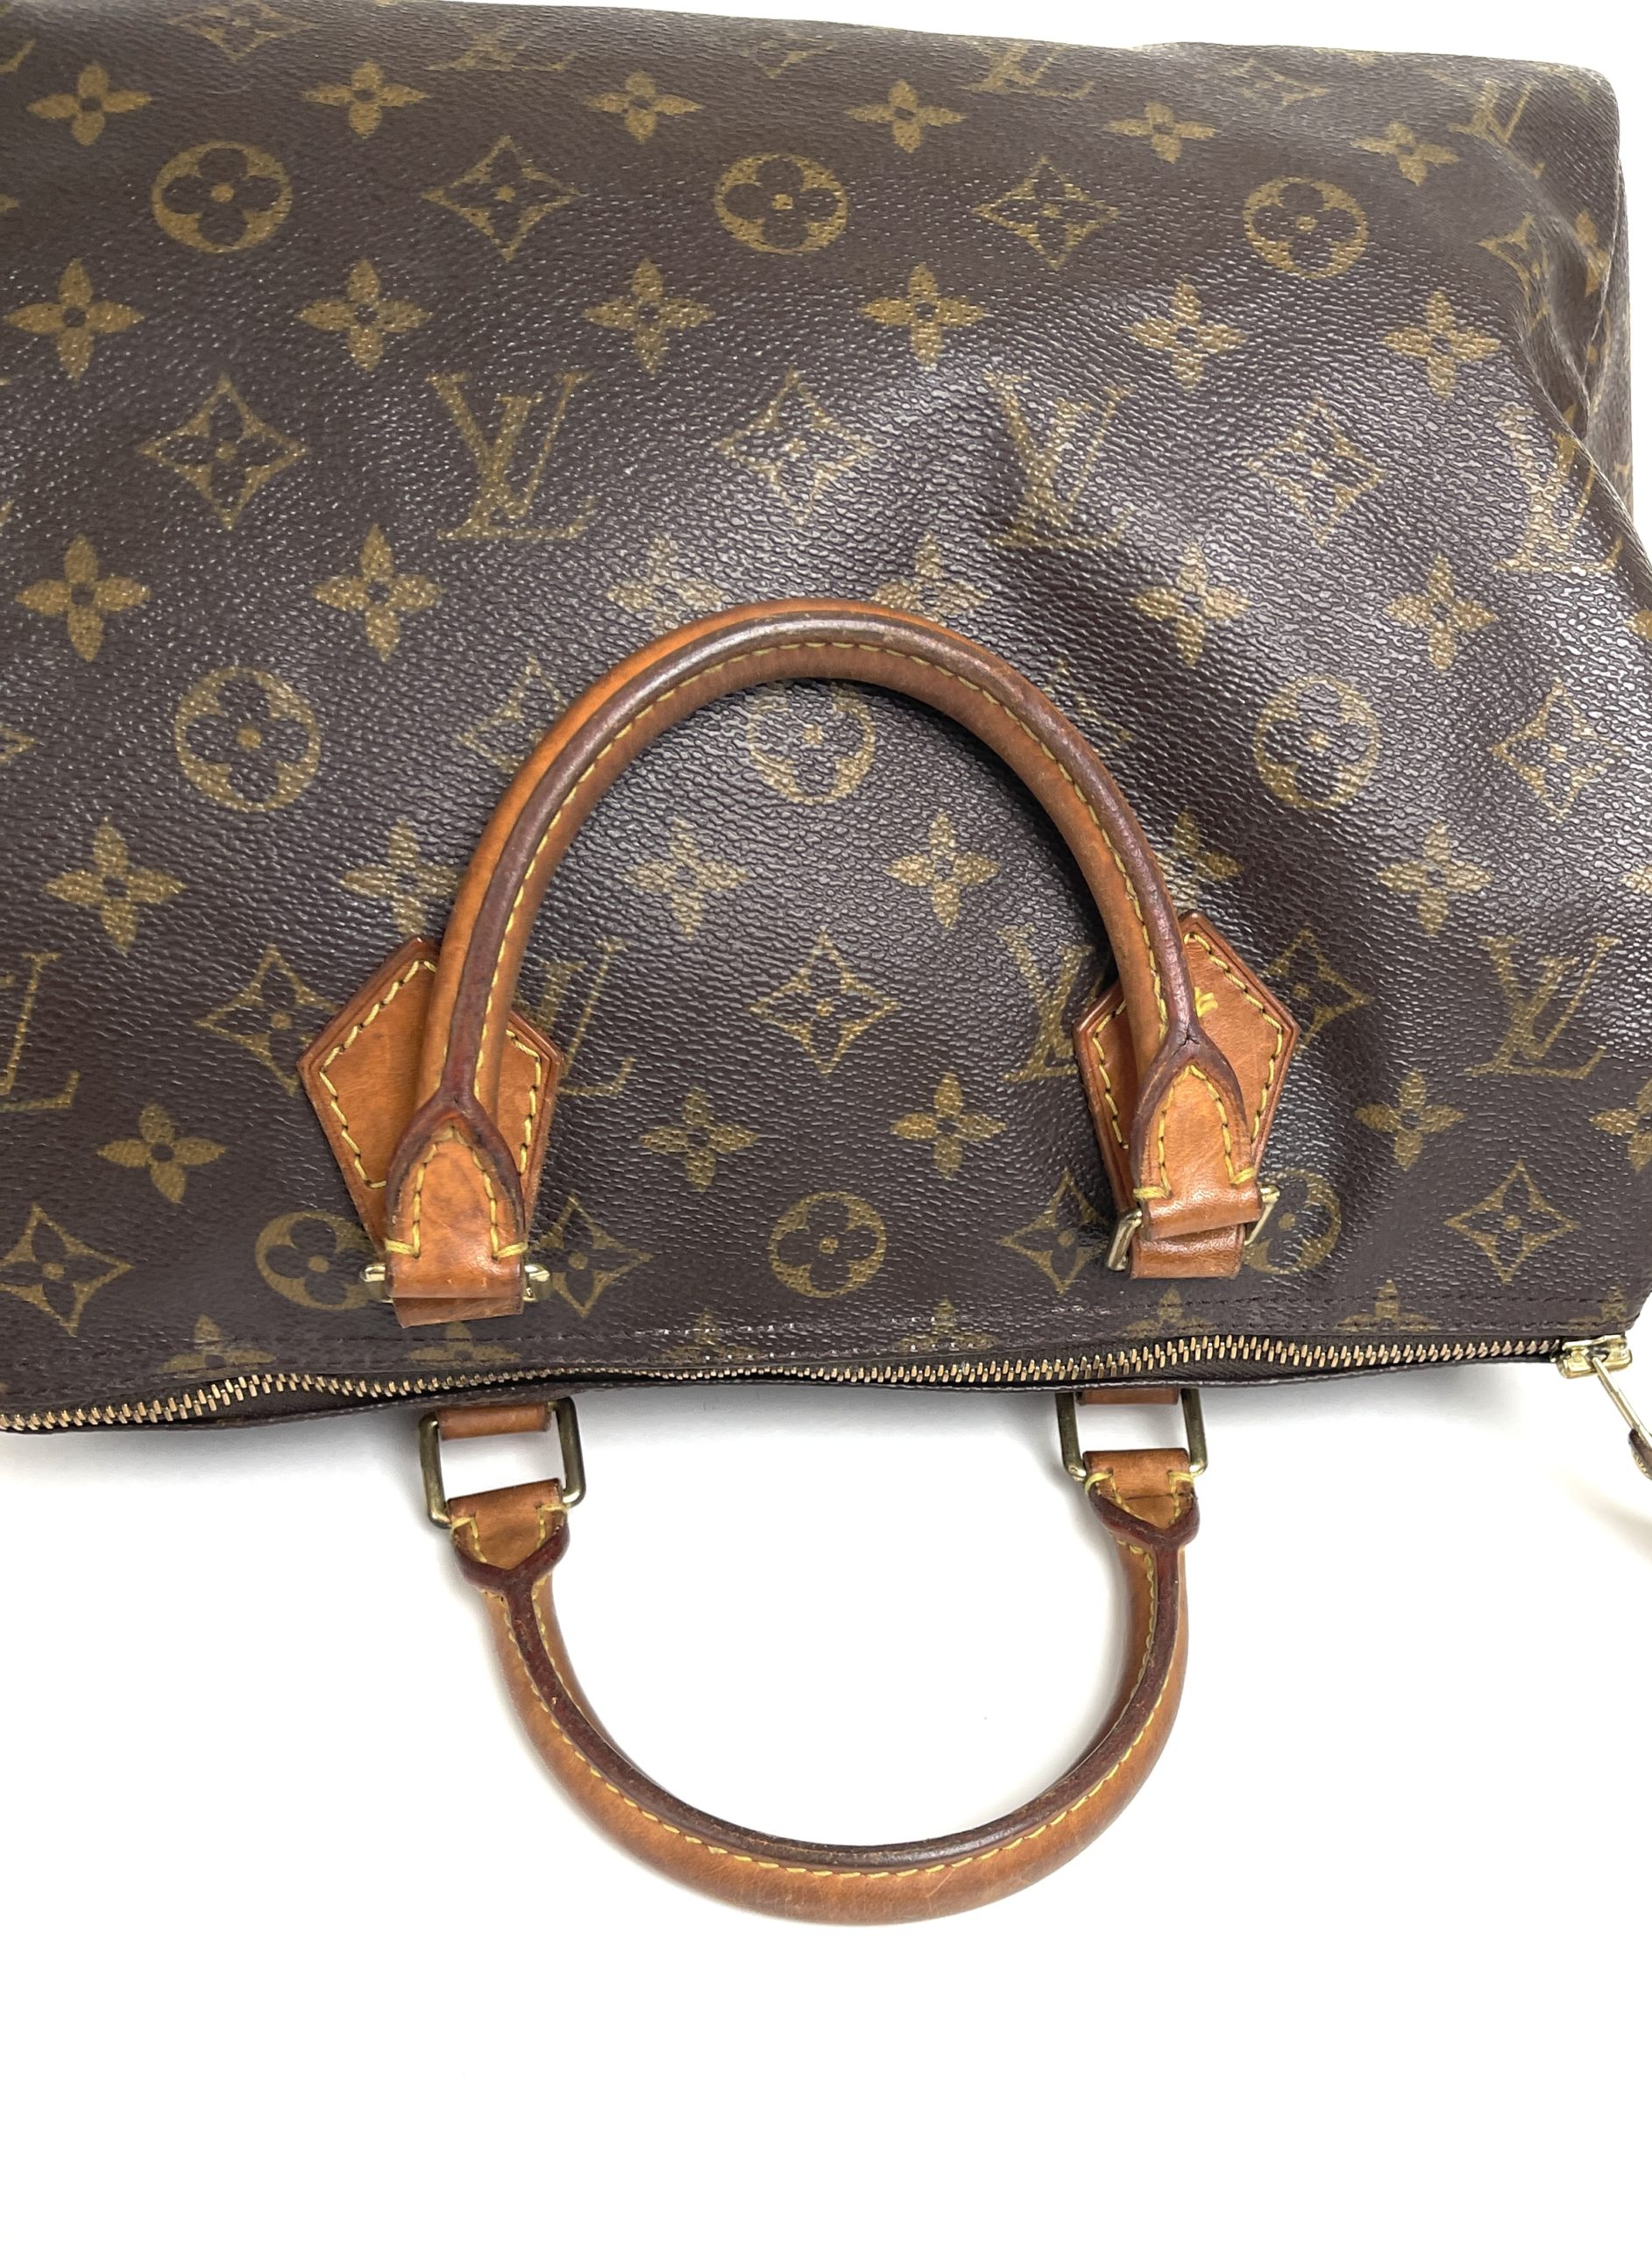 Louis Vuitton Speedy 30 Vintage French Company Satchel Handbag-E5439-SOLD 